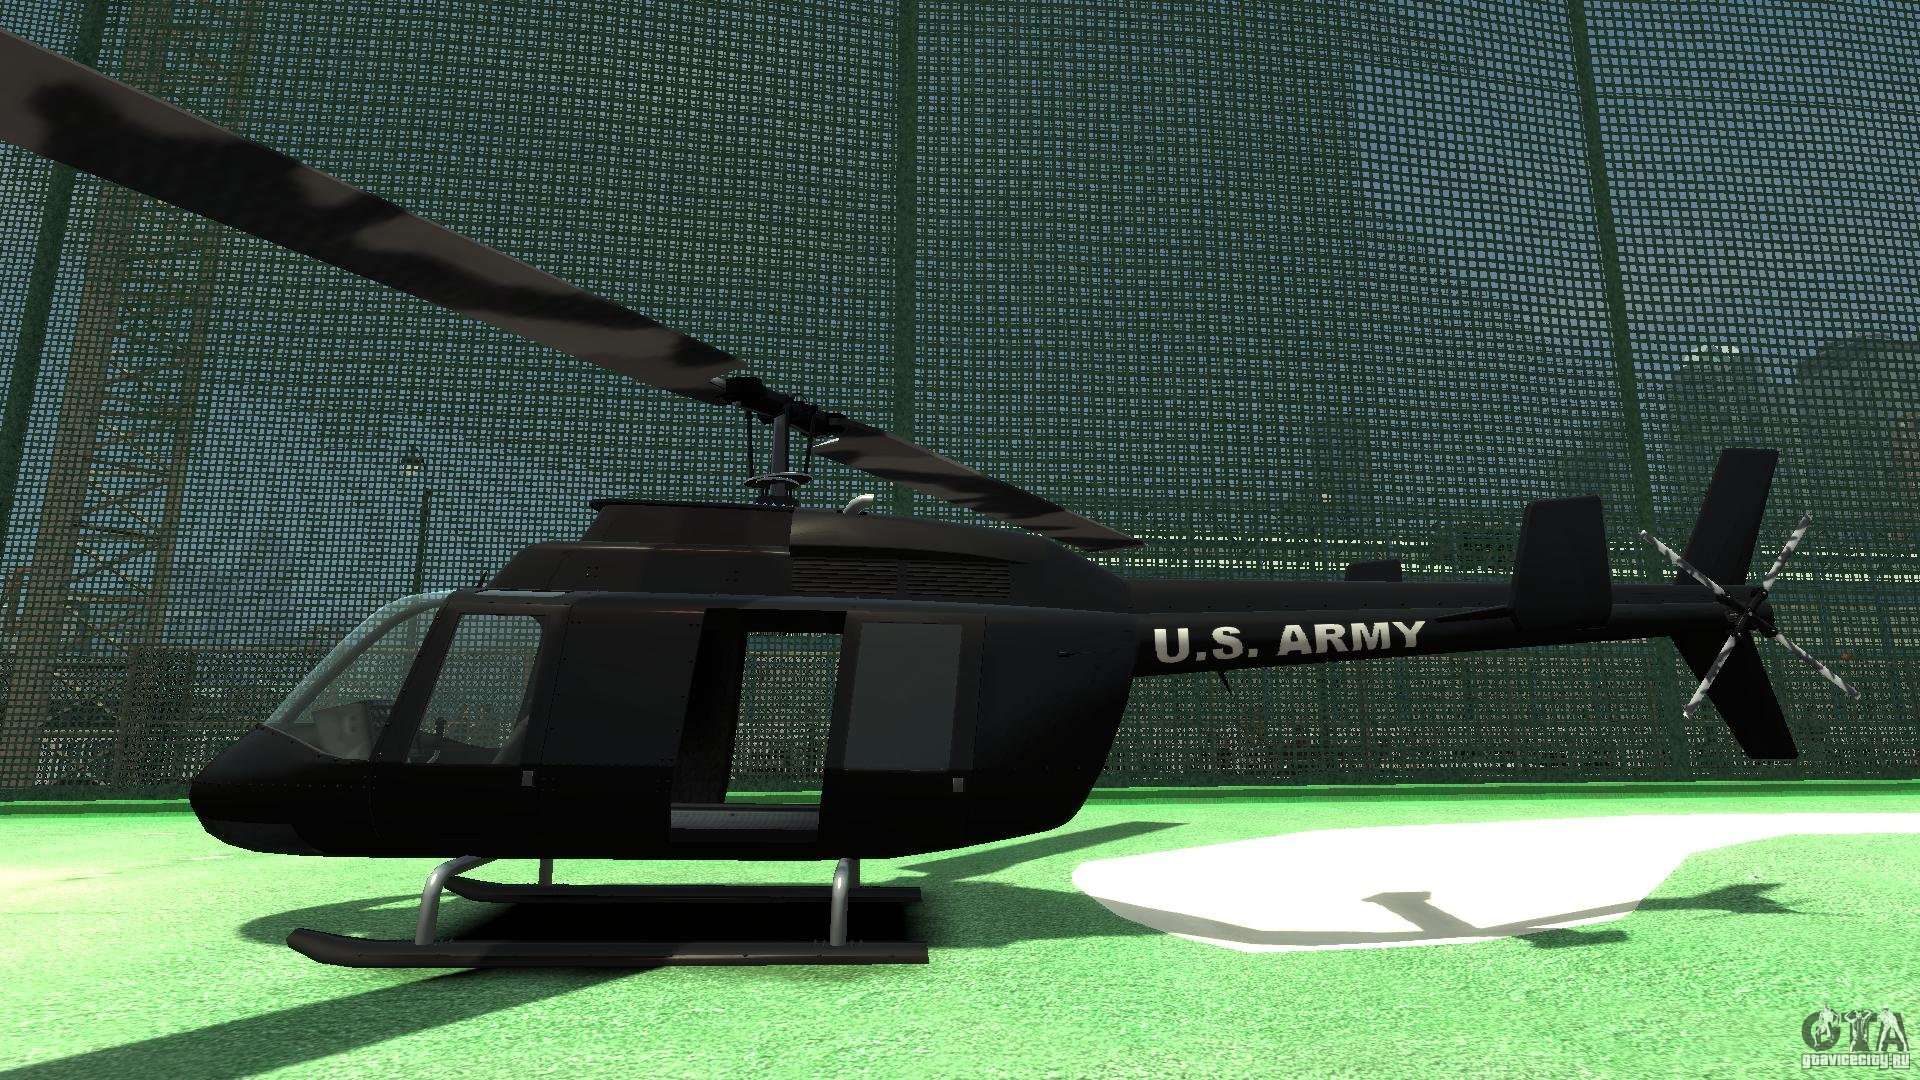 Black U.S. ARMY Helicopter v0.2 for GTA 41920 x 1080